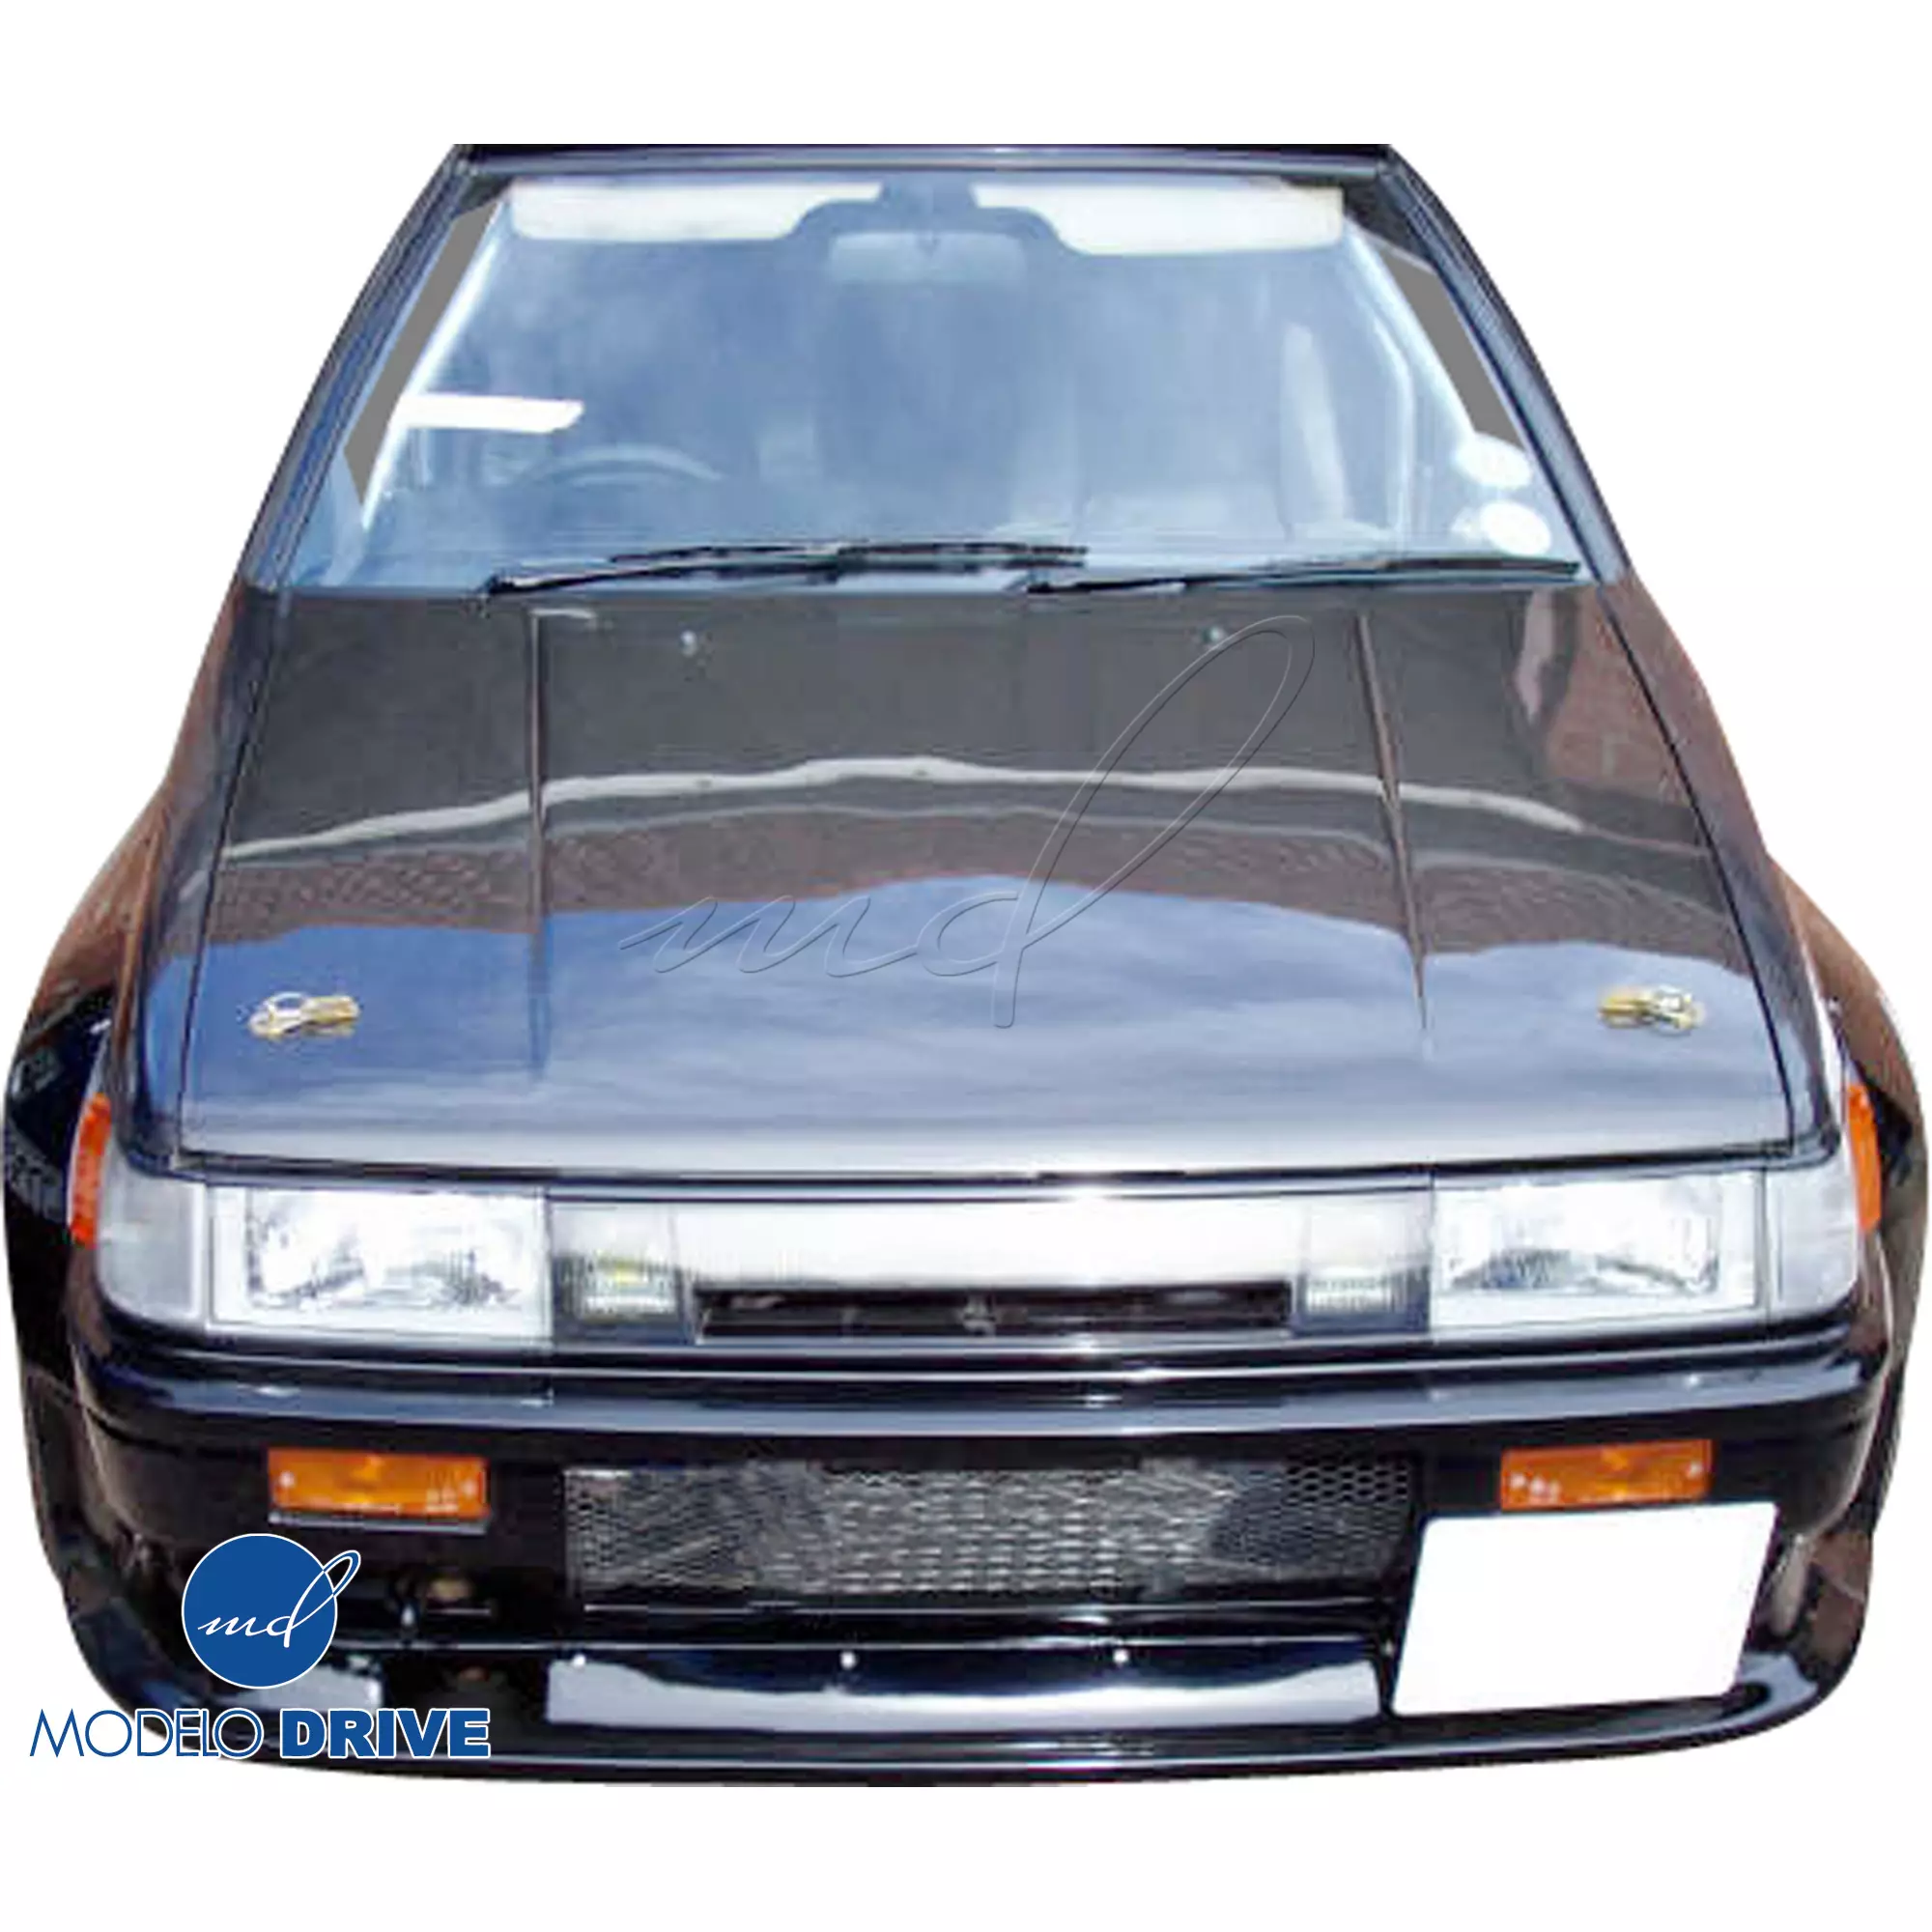 ModeloDrive Carbon Fiber OER Hood > Toyota Corolla AE86 Levin 1984-1987 - Image 29